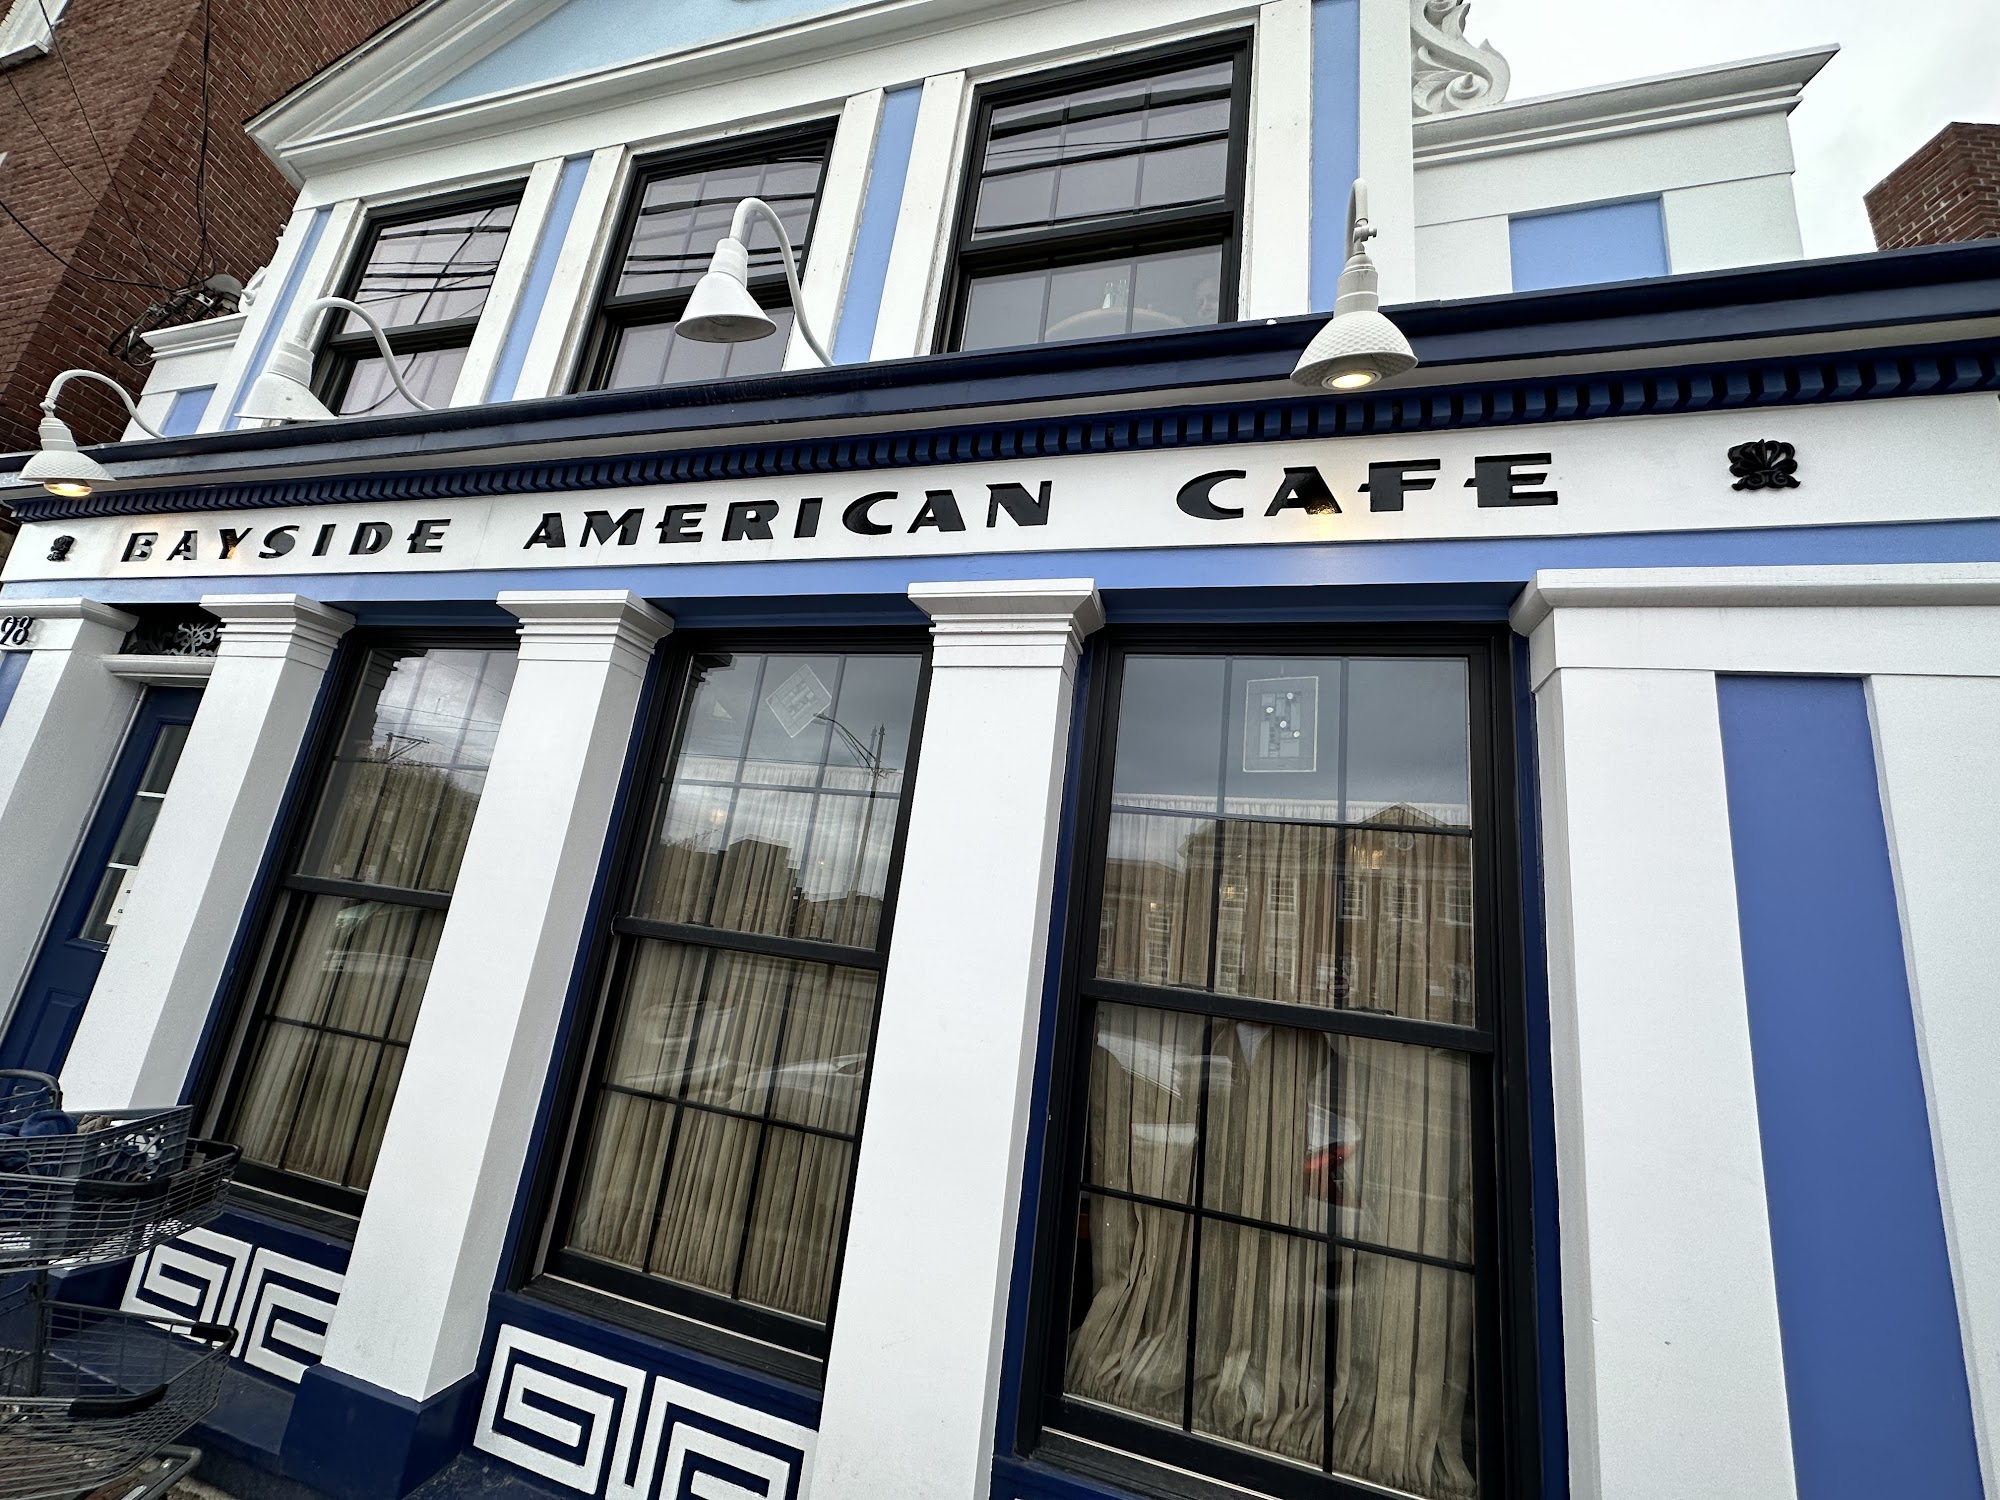 Bayside American Cafe